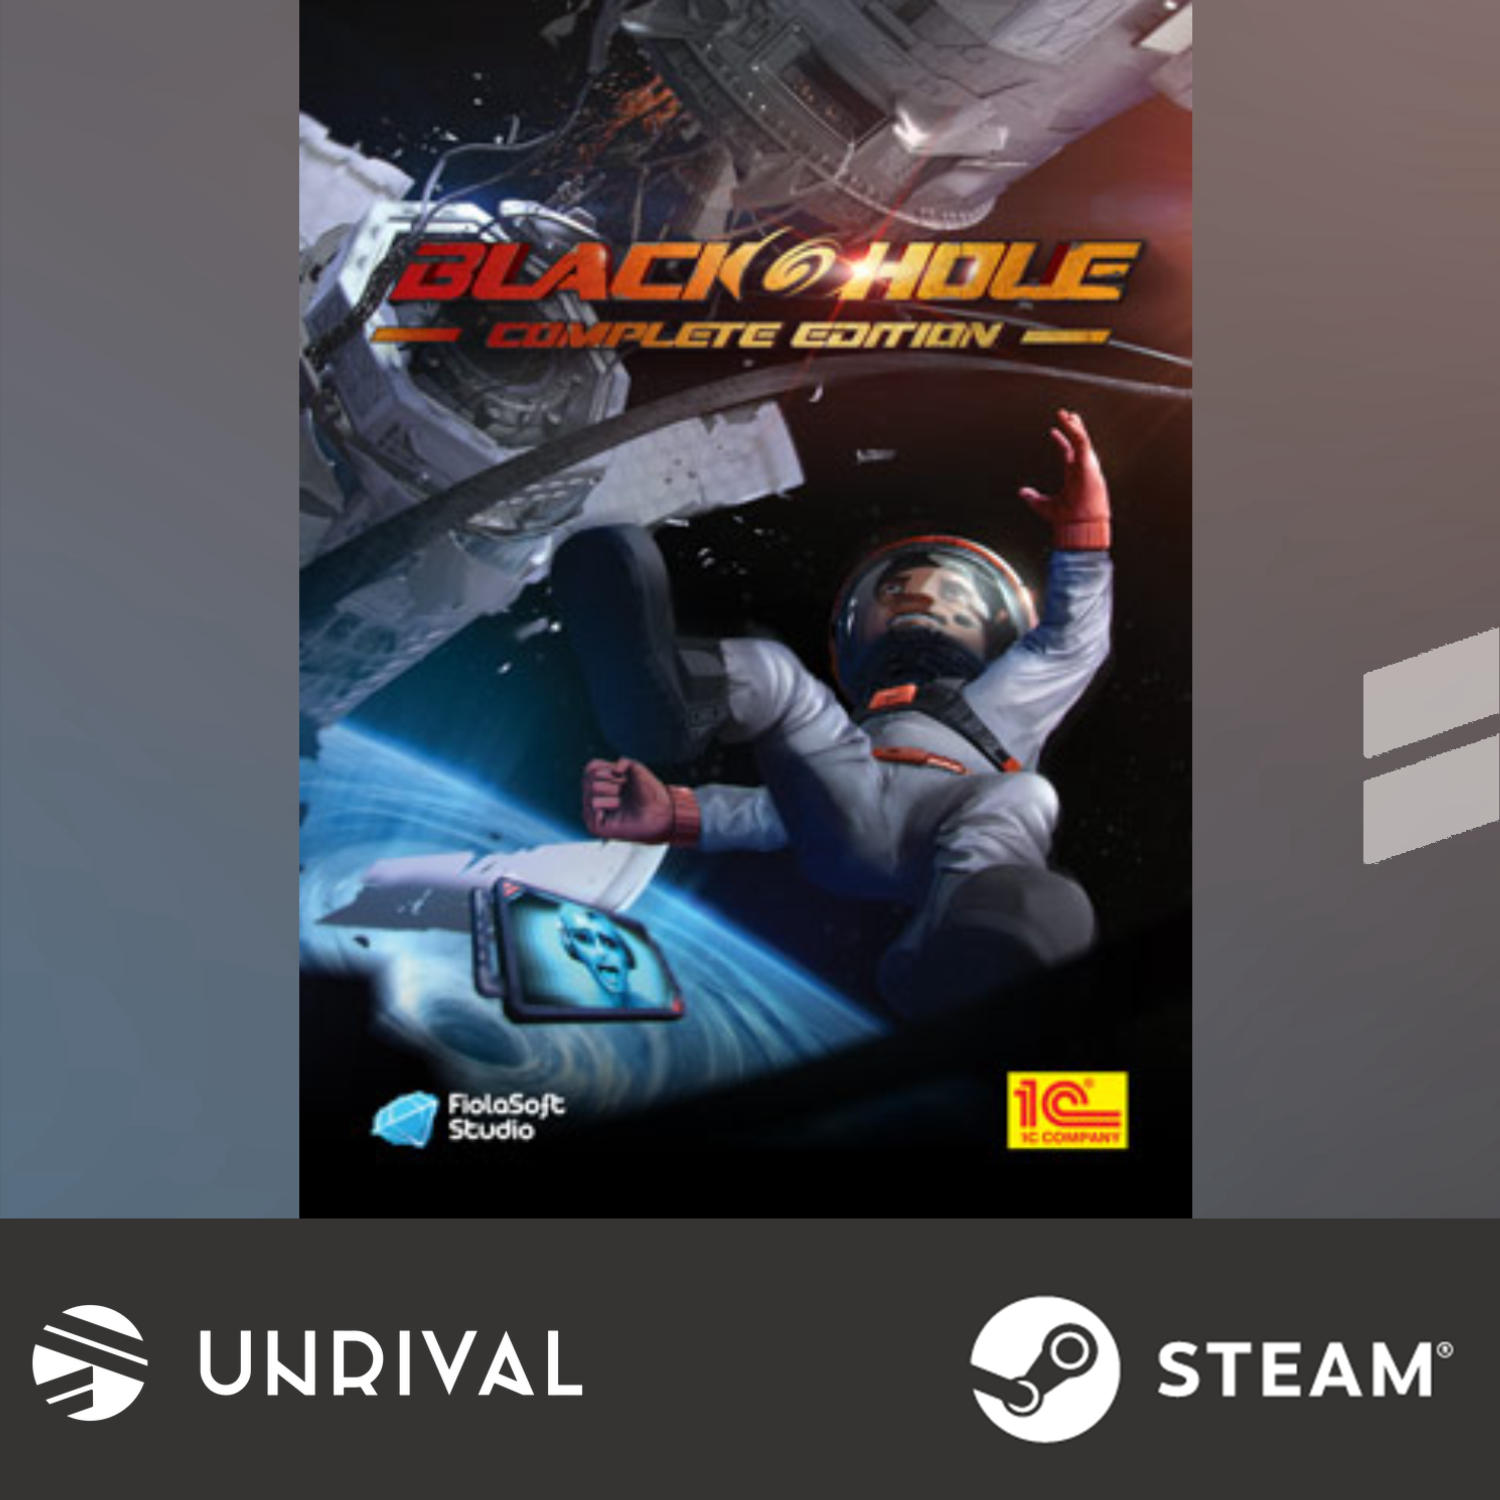 BLACKHOLE: Complete Edition PC Digital Download Game (Single Player) - Unrival